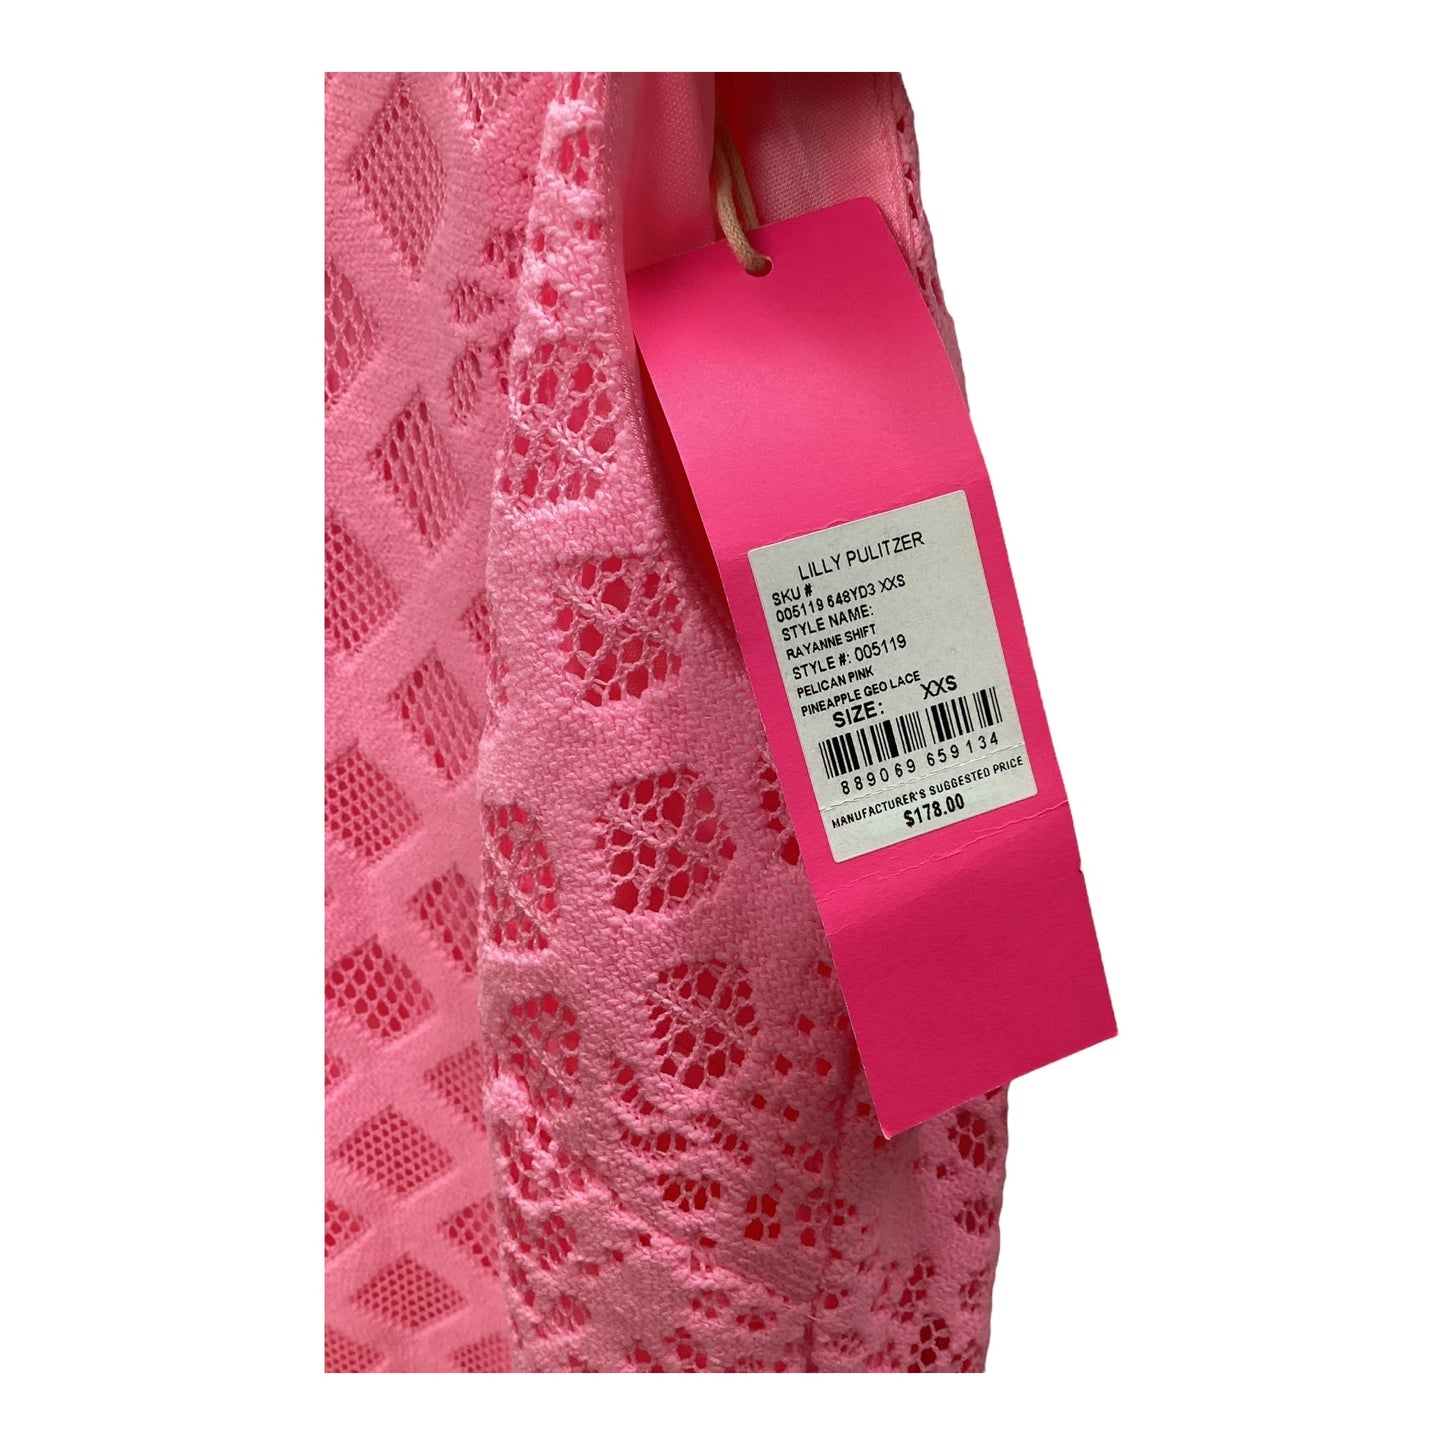 Pink Dress Designer Lilly Pulitzer, Size Xxs